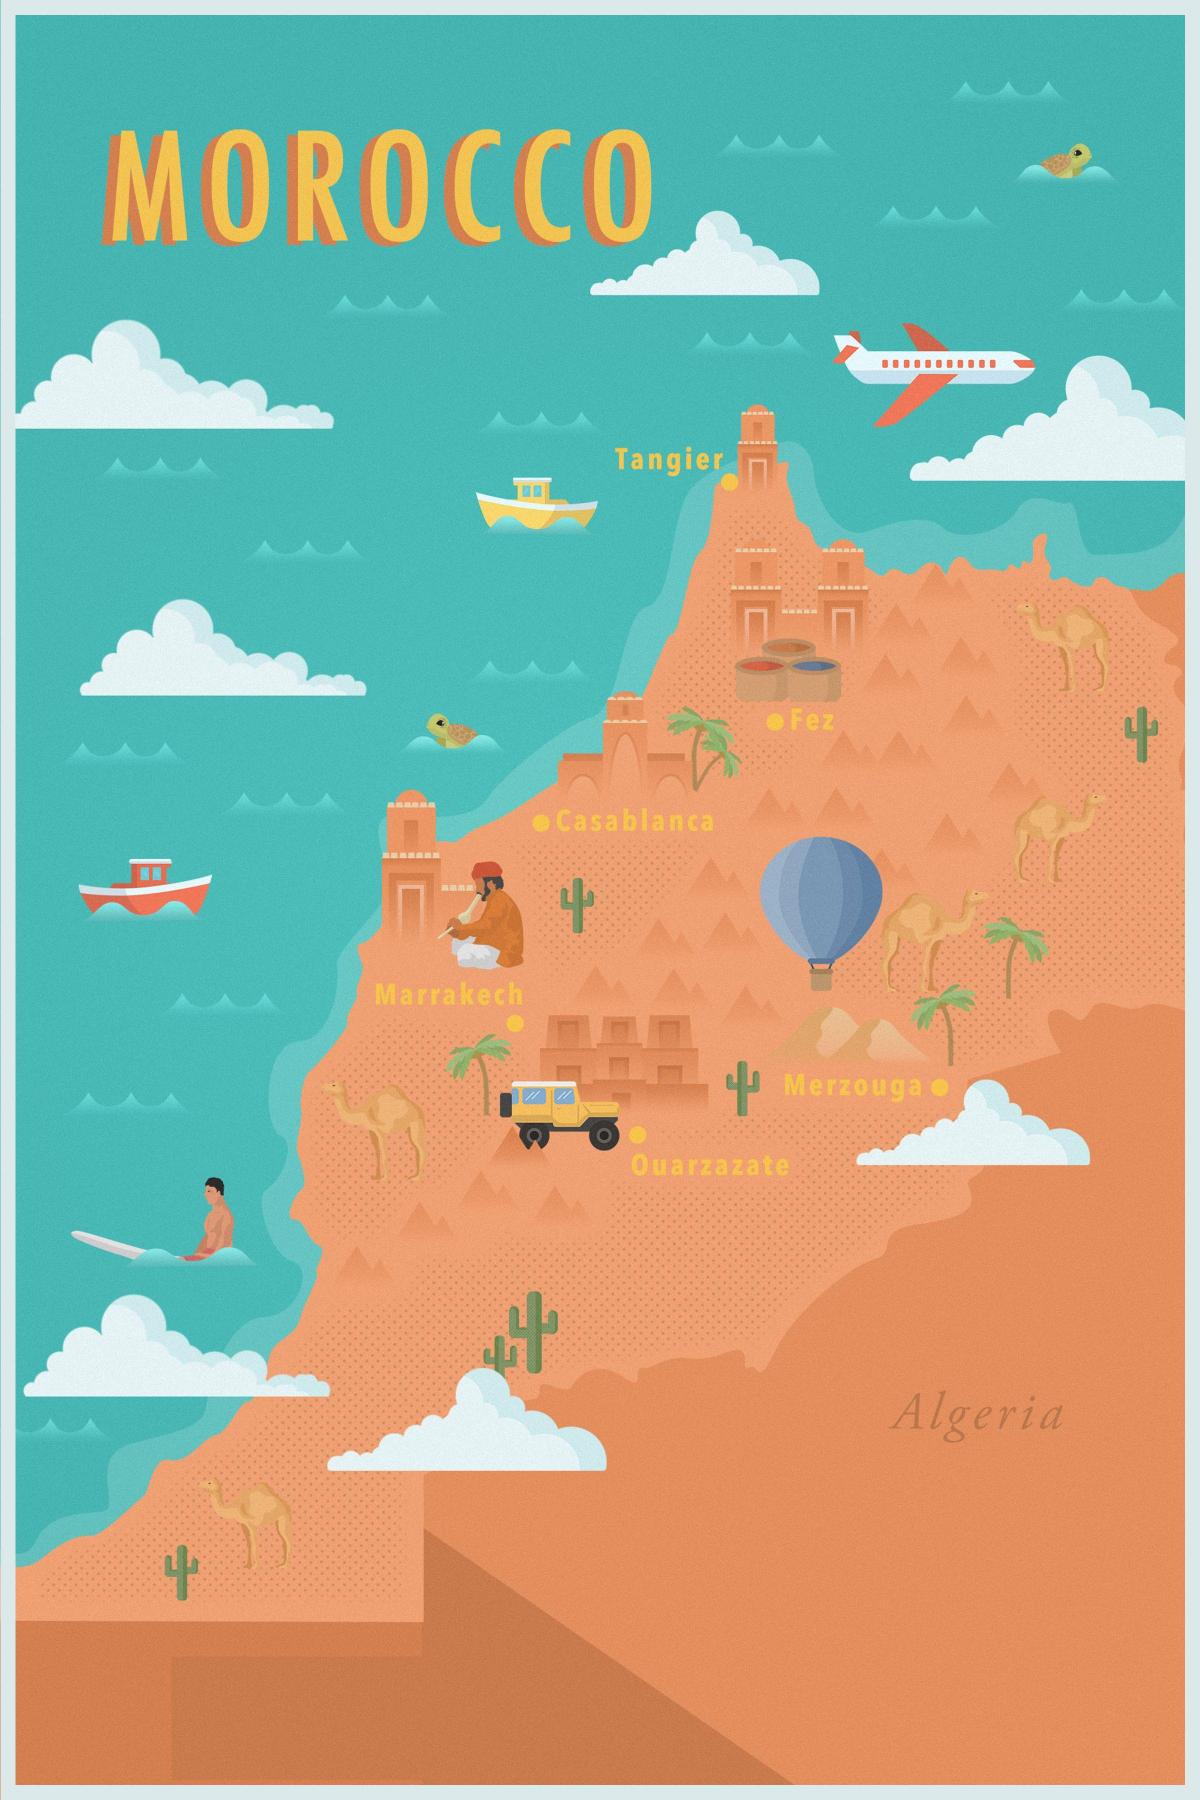 Morocco travel map